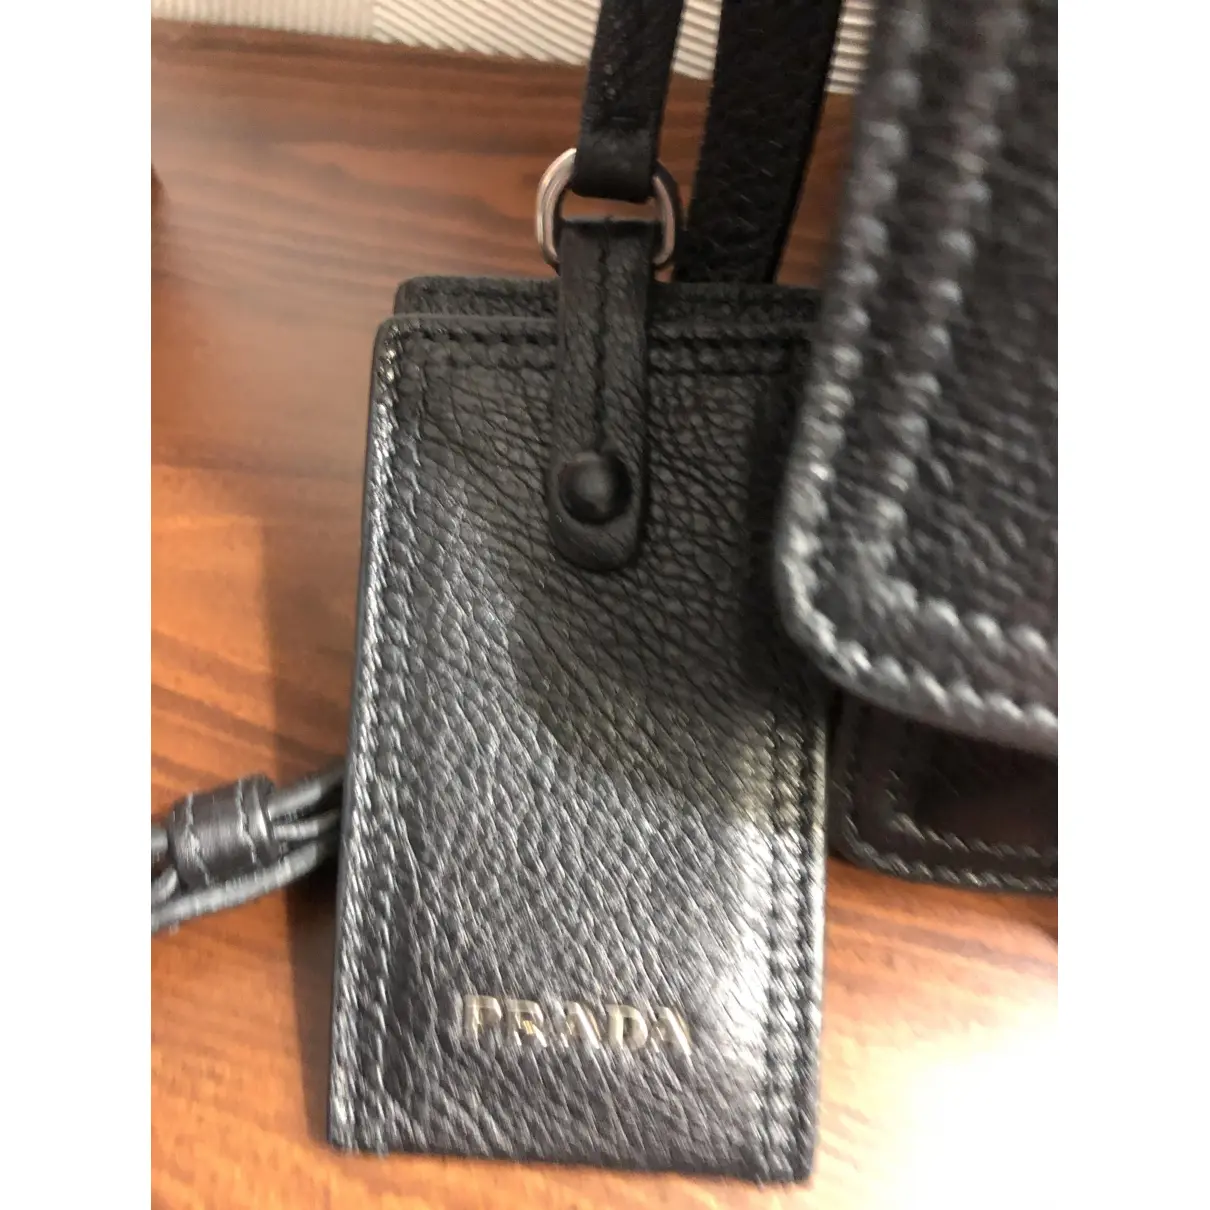 Buy Prada Etiquette leather handbag online